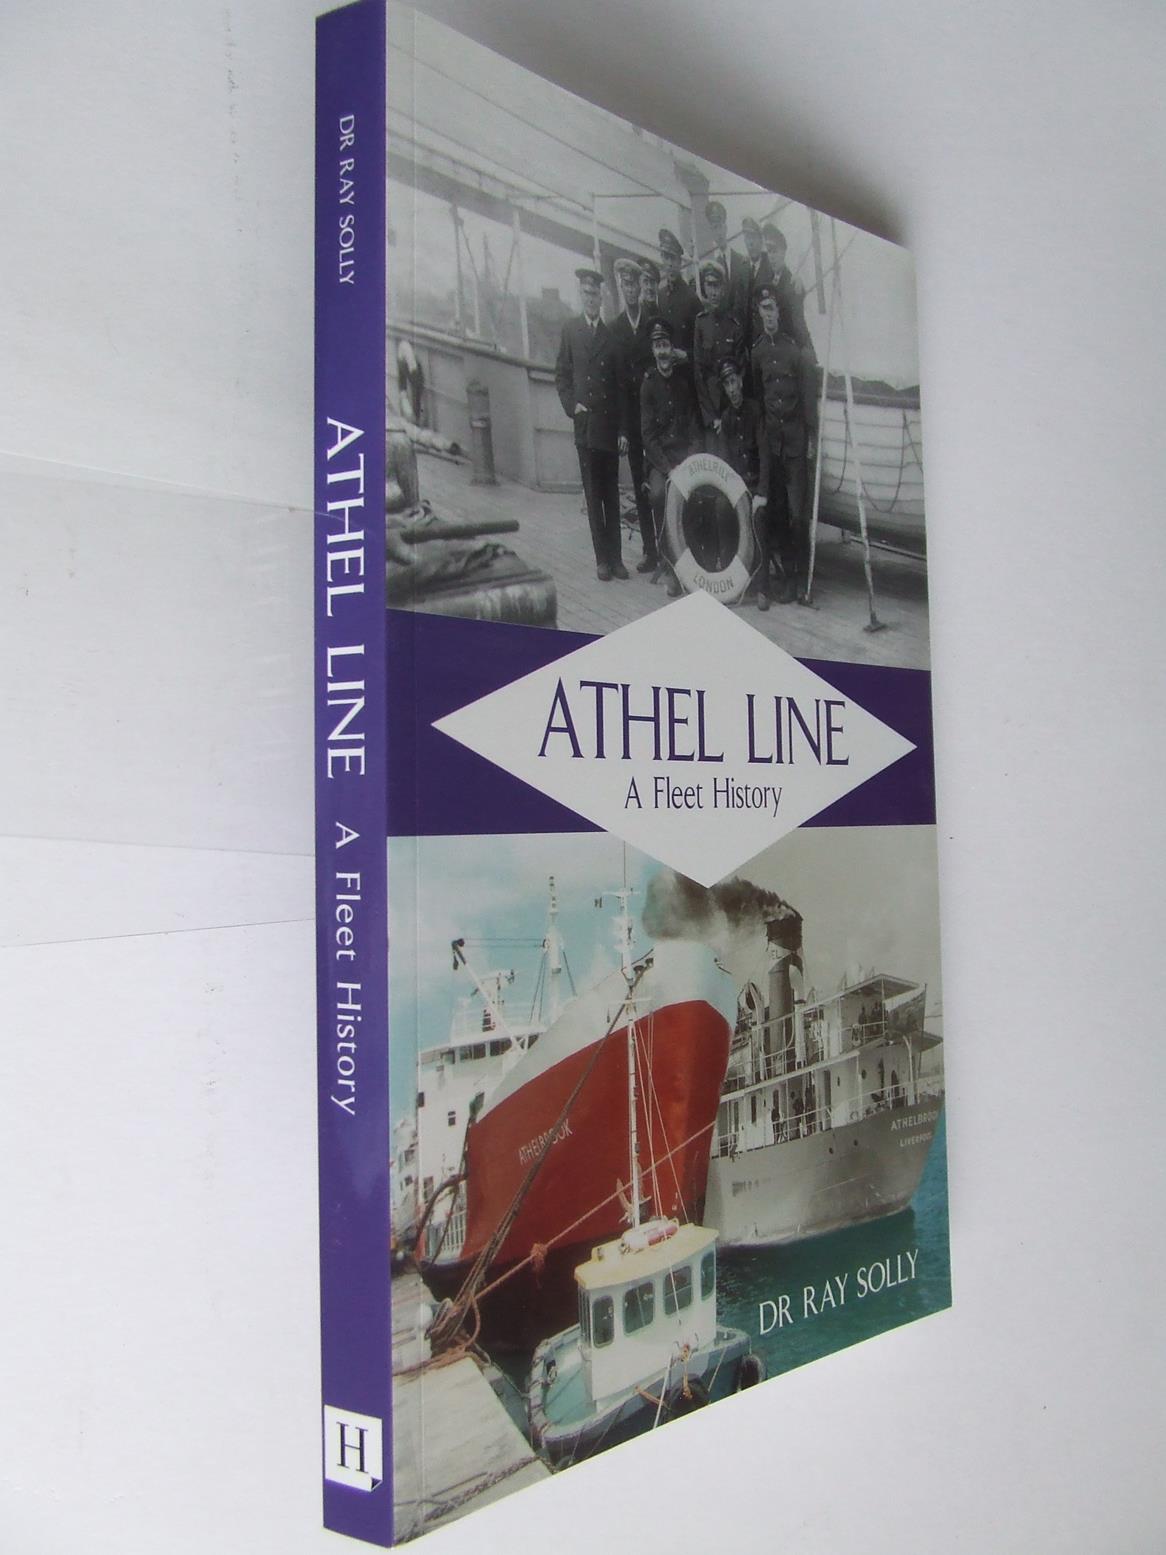 Athel Line, a fleet history